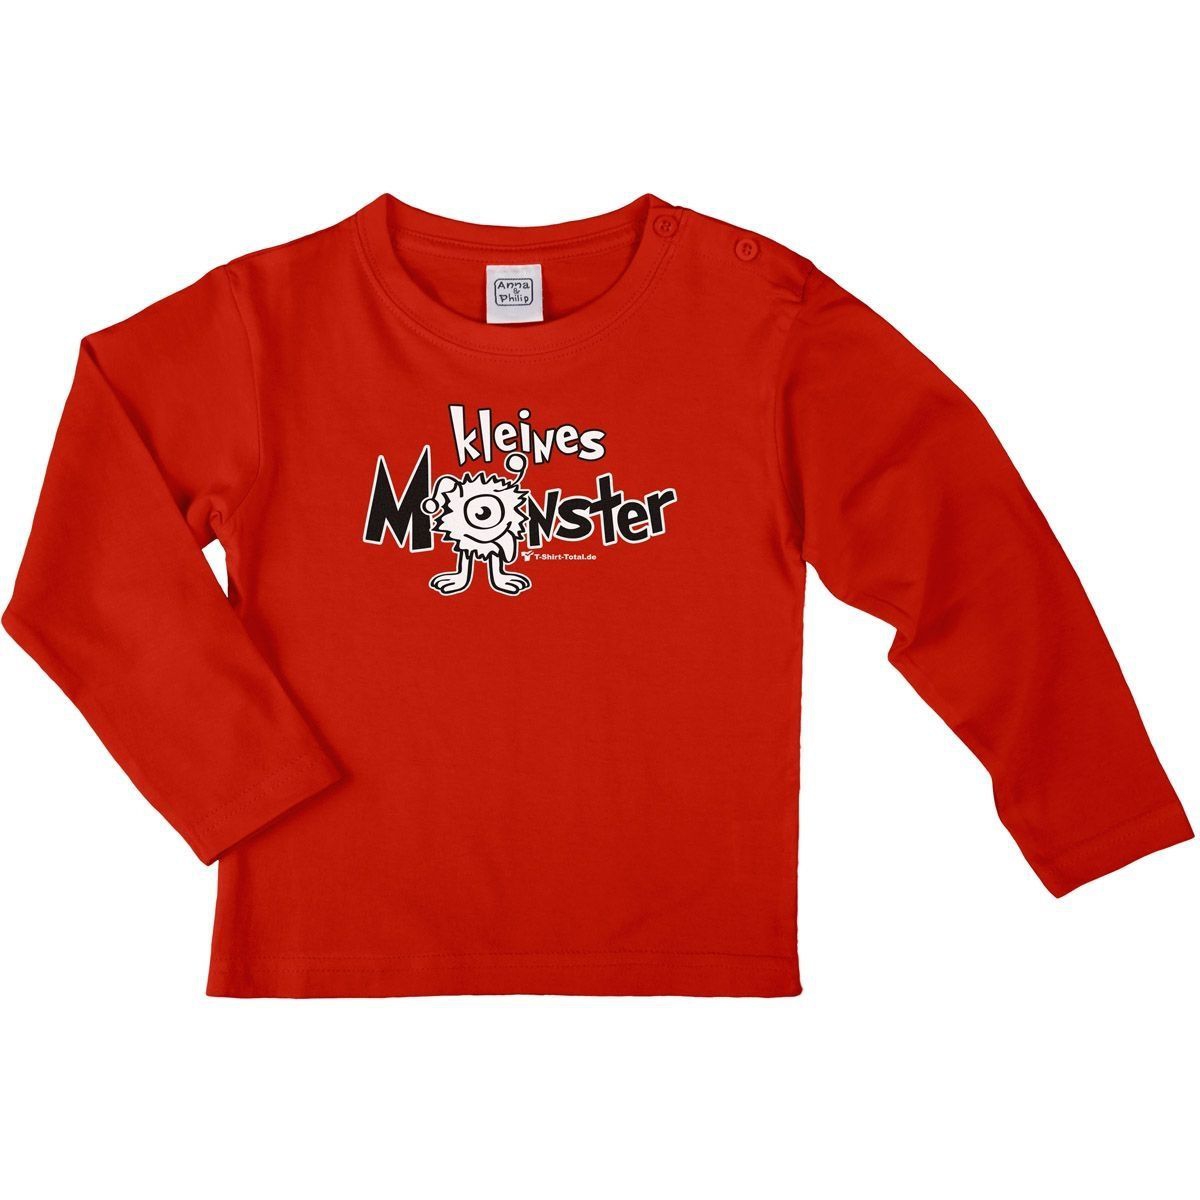 Kleines Monster Kinder Langarm Shirt rot 110 / 116